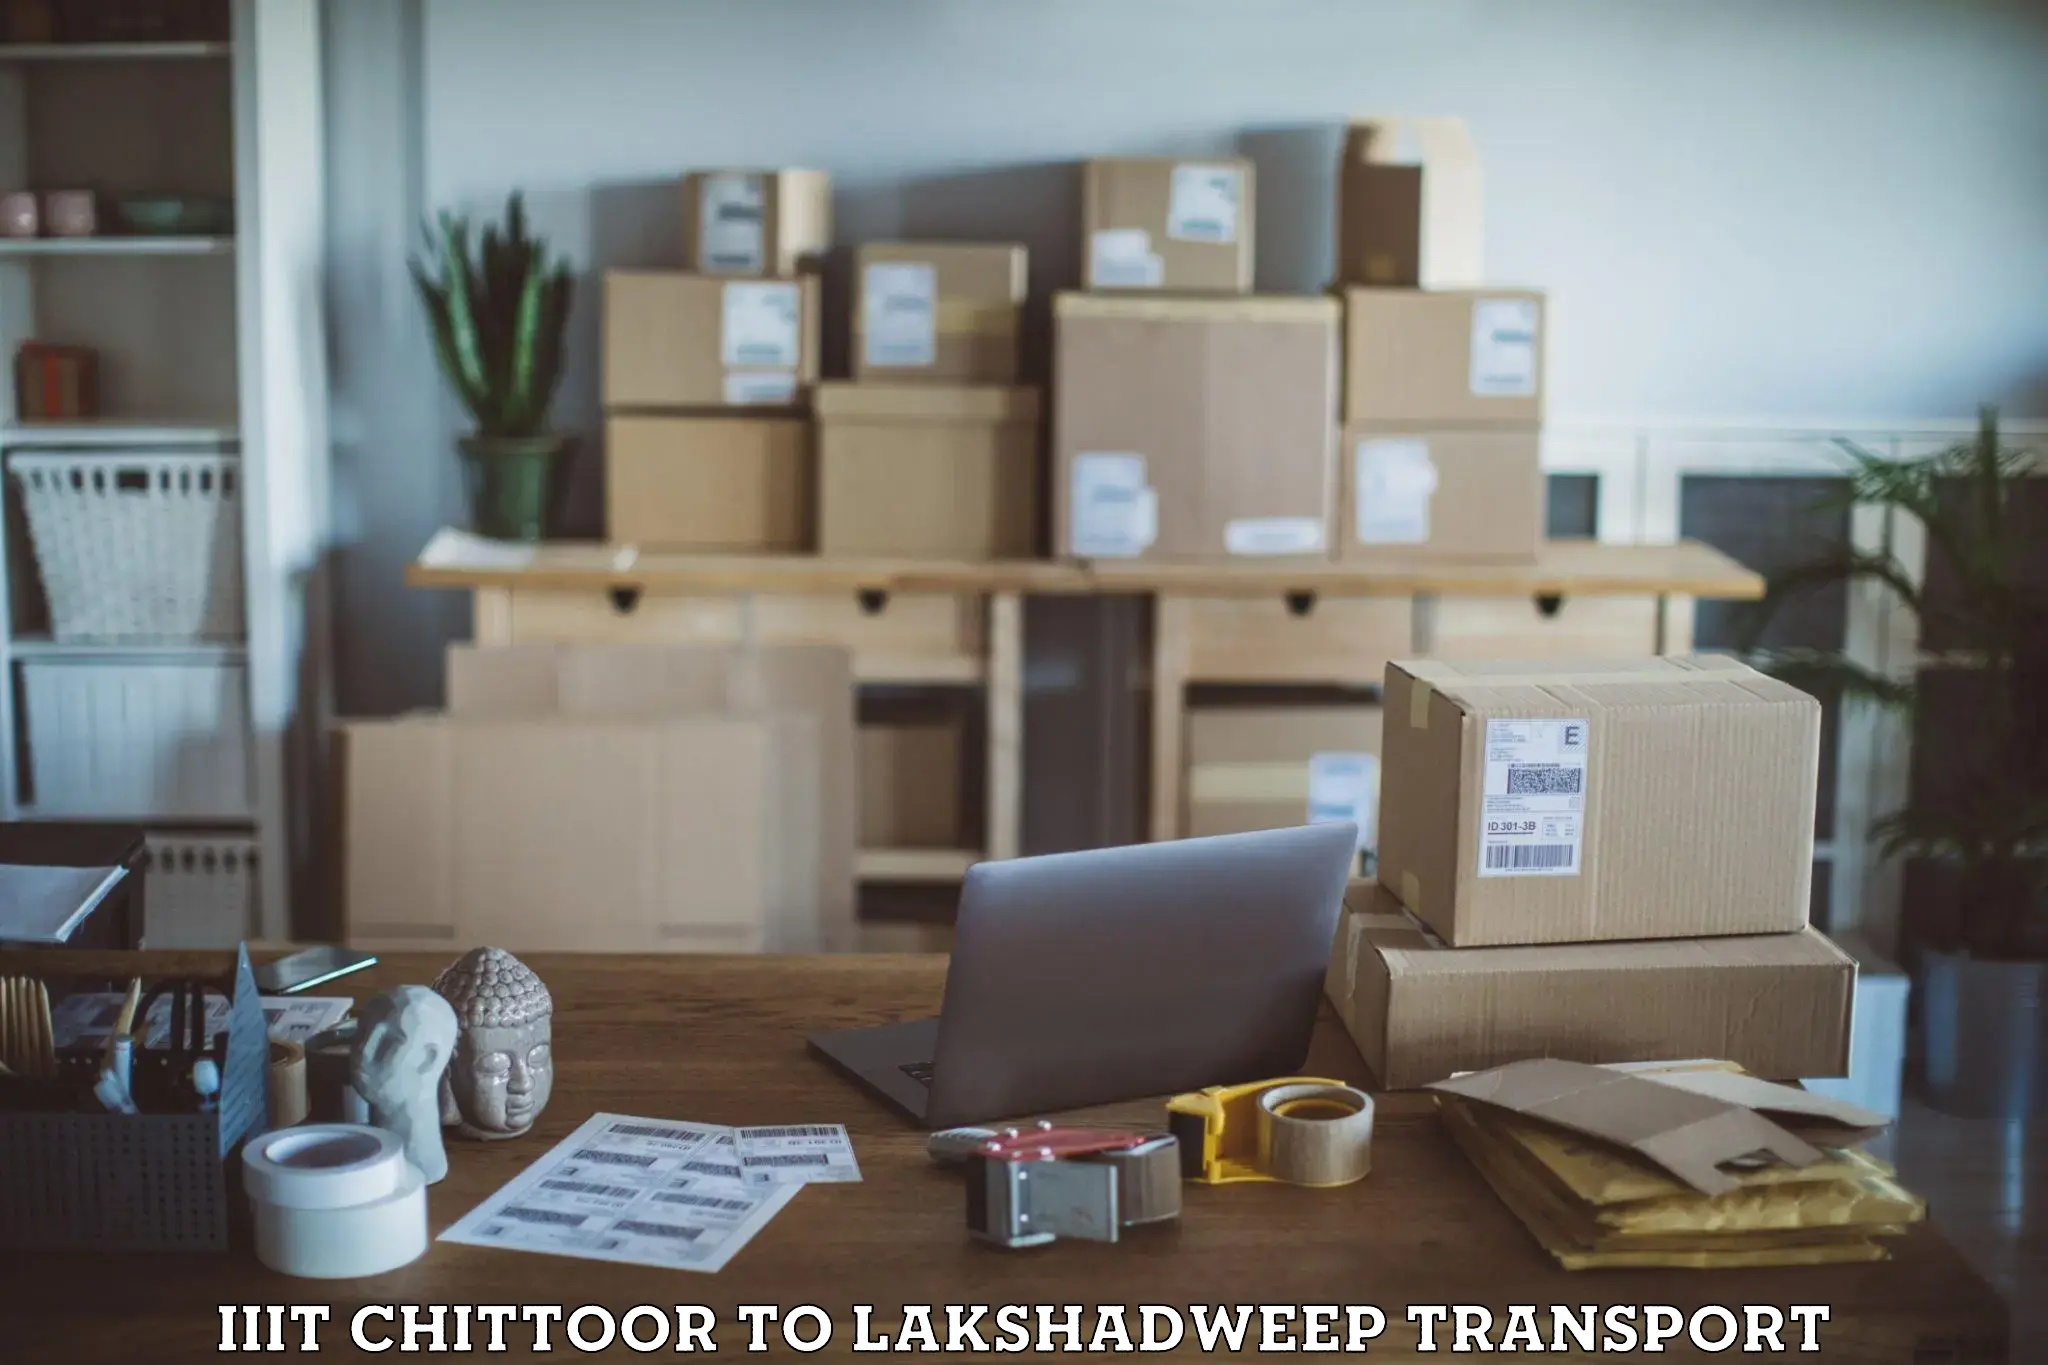 Online transport service IIIT Chittoor to Lakshadweep